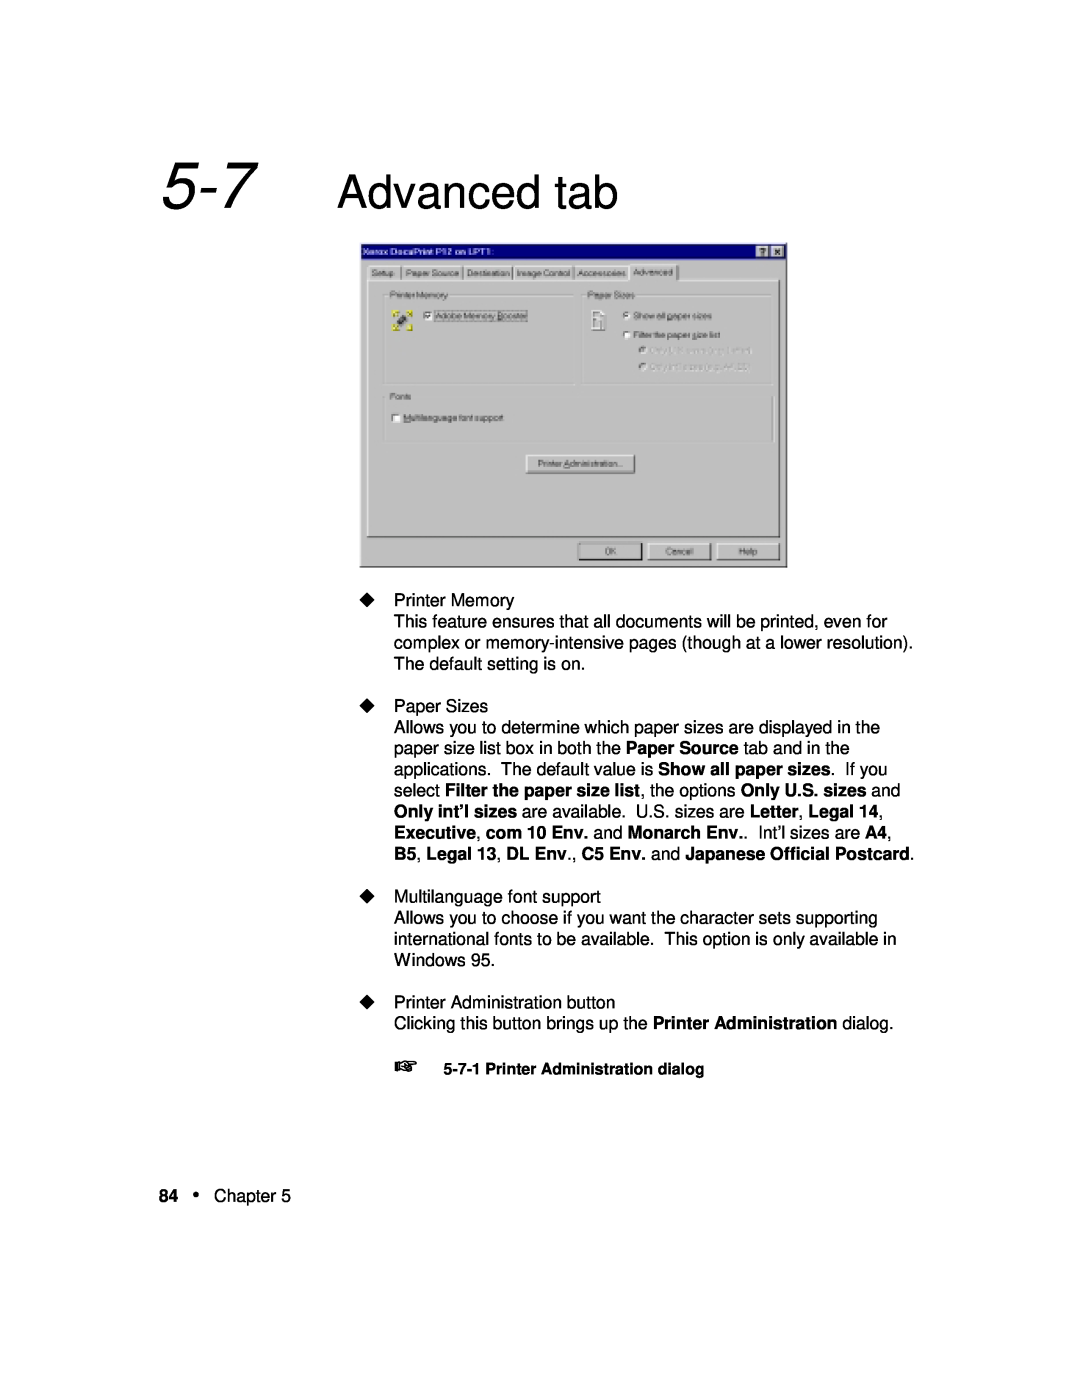 Xerox P12 manual Advanced tab, B5, Legal 13, DL Env., C5 Env. and Japanese Official Postcard 